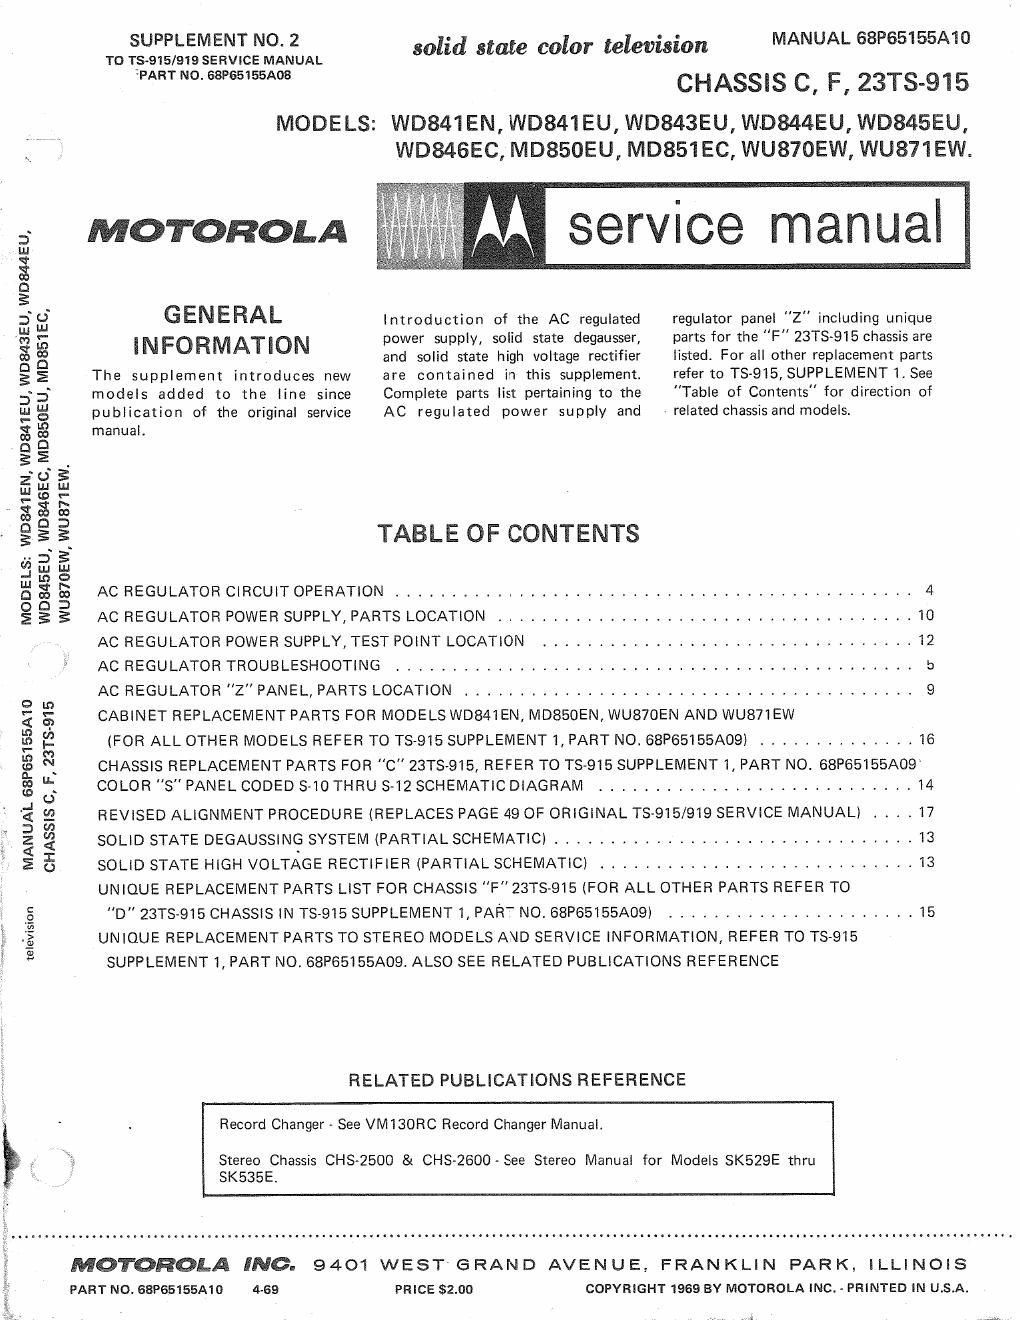 motorola wu 871 ew service manual